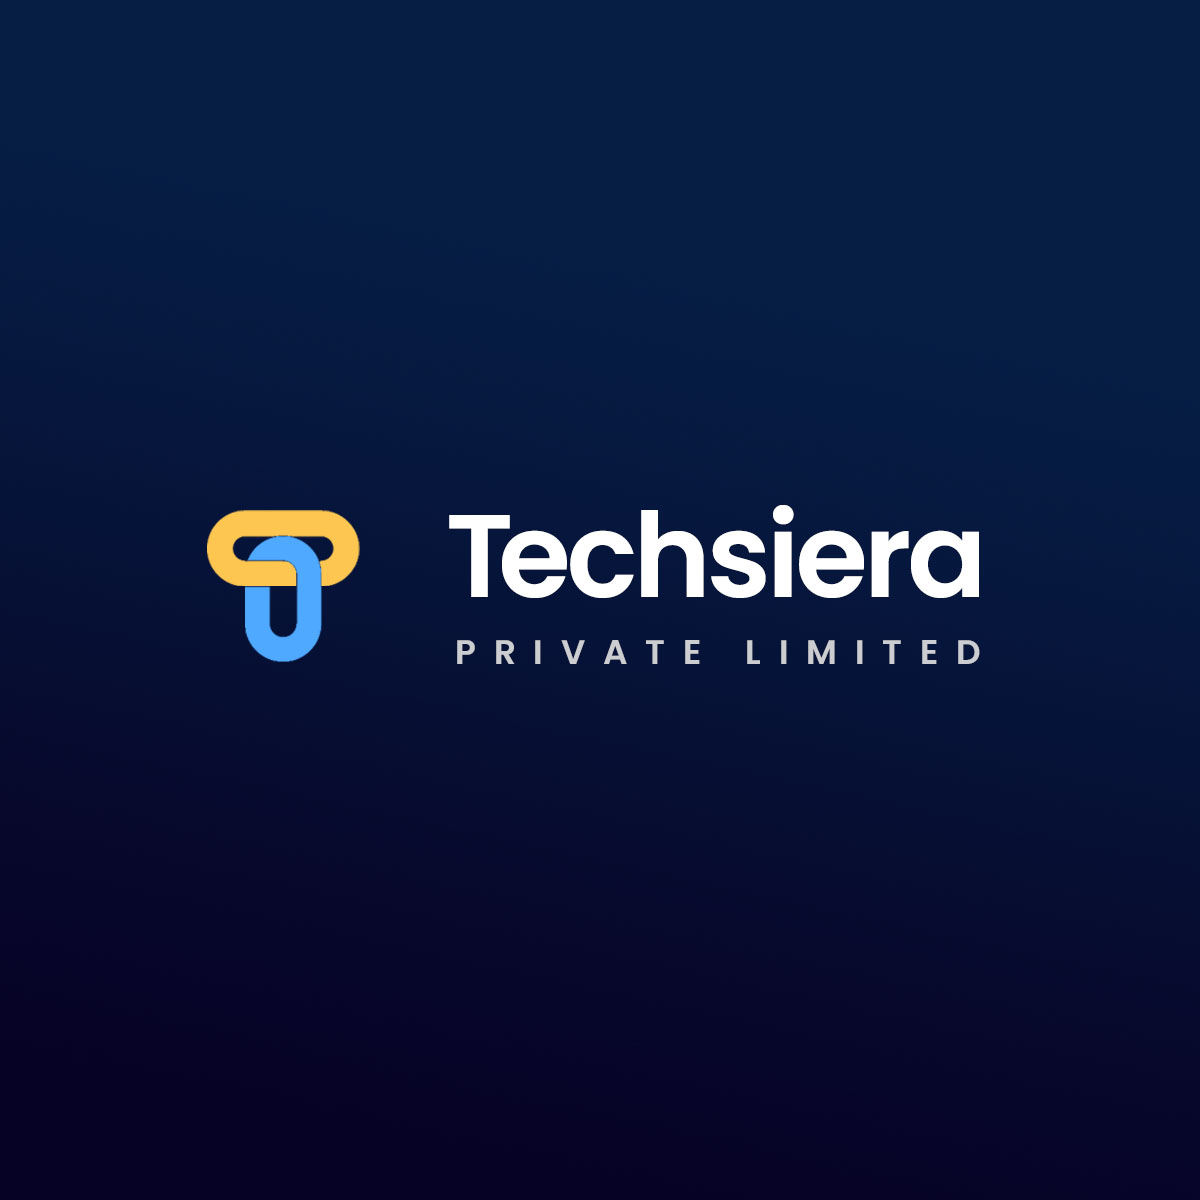 TechSiera Private Limited in Elioplus